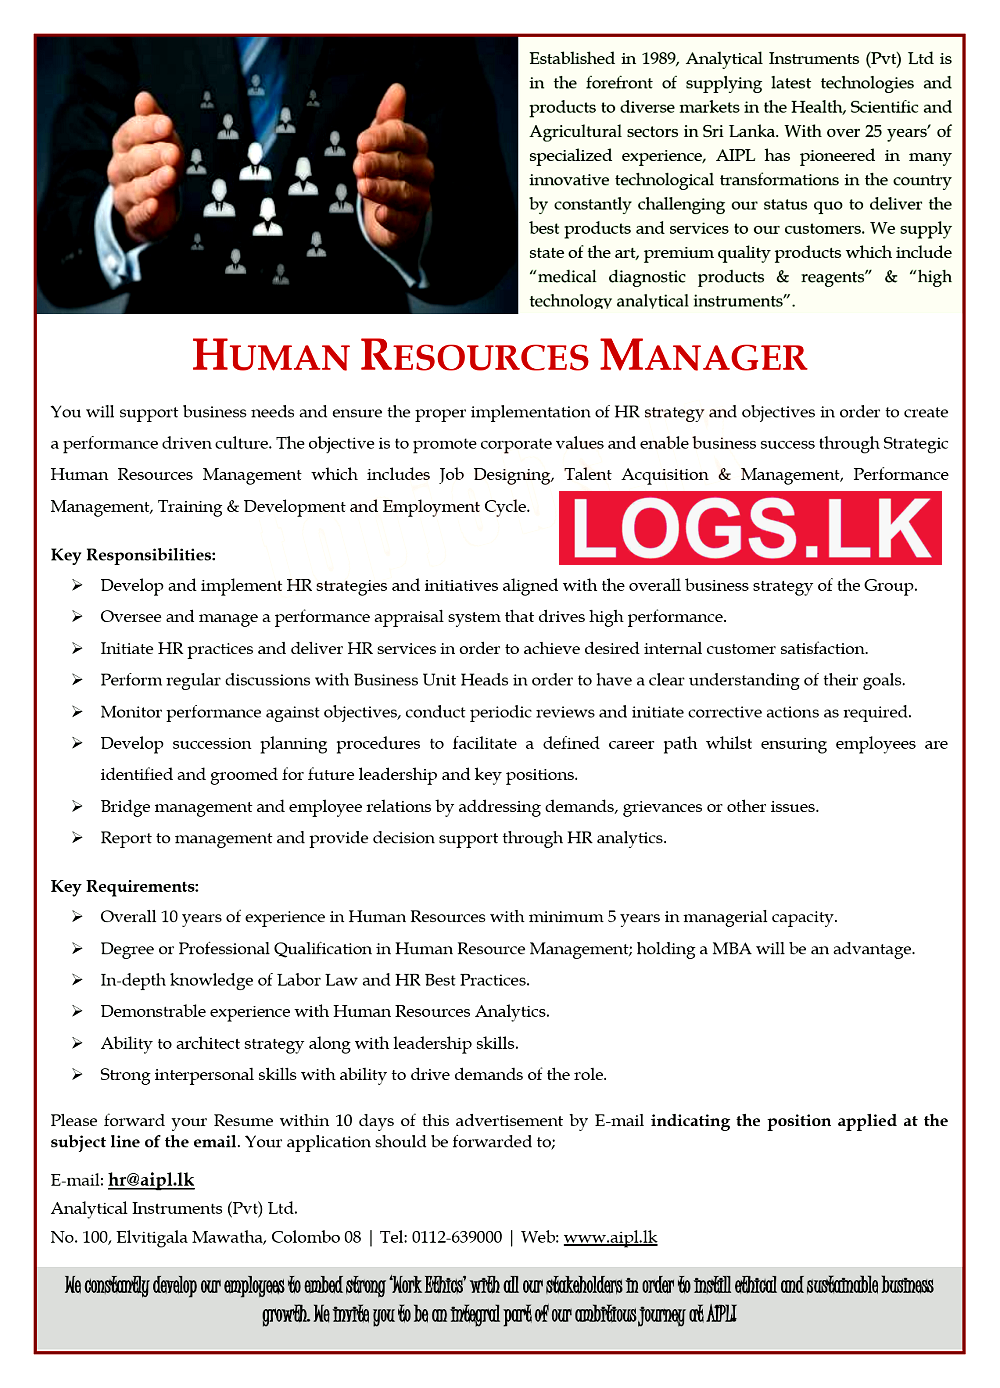 Human Resources Manager Job Vacancy at Analytical Instruments (Pvt) Ltd Sri Lanka